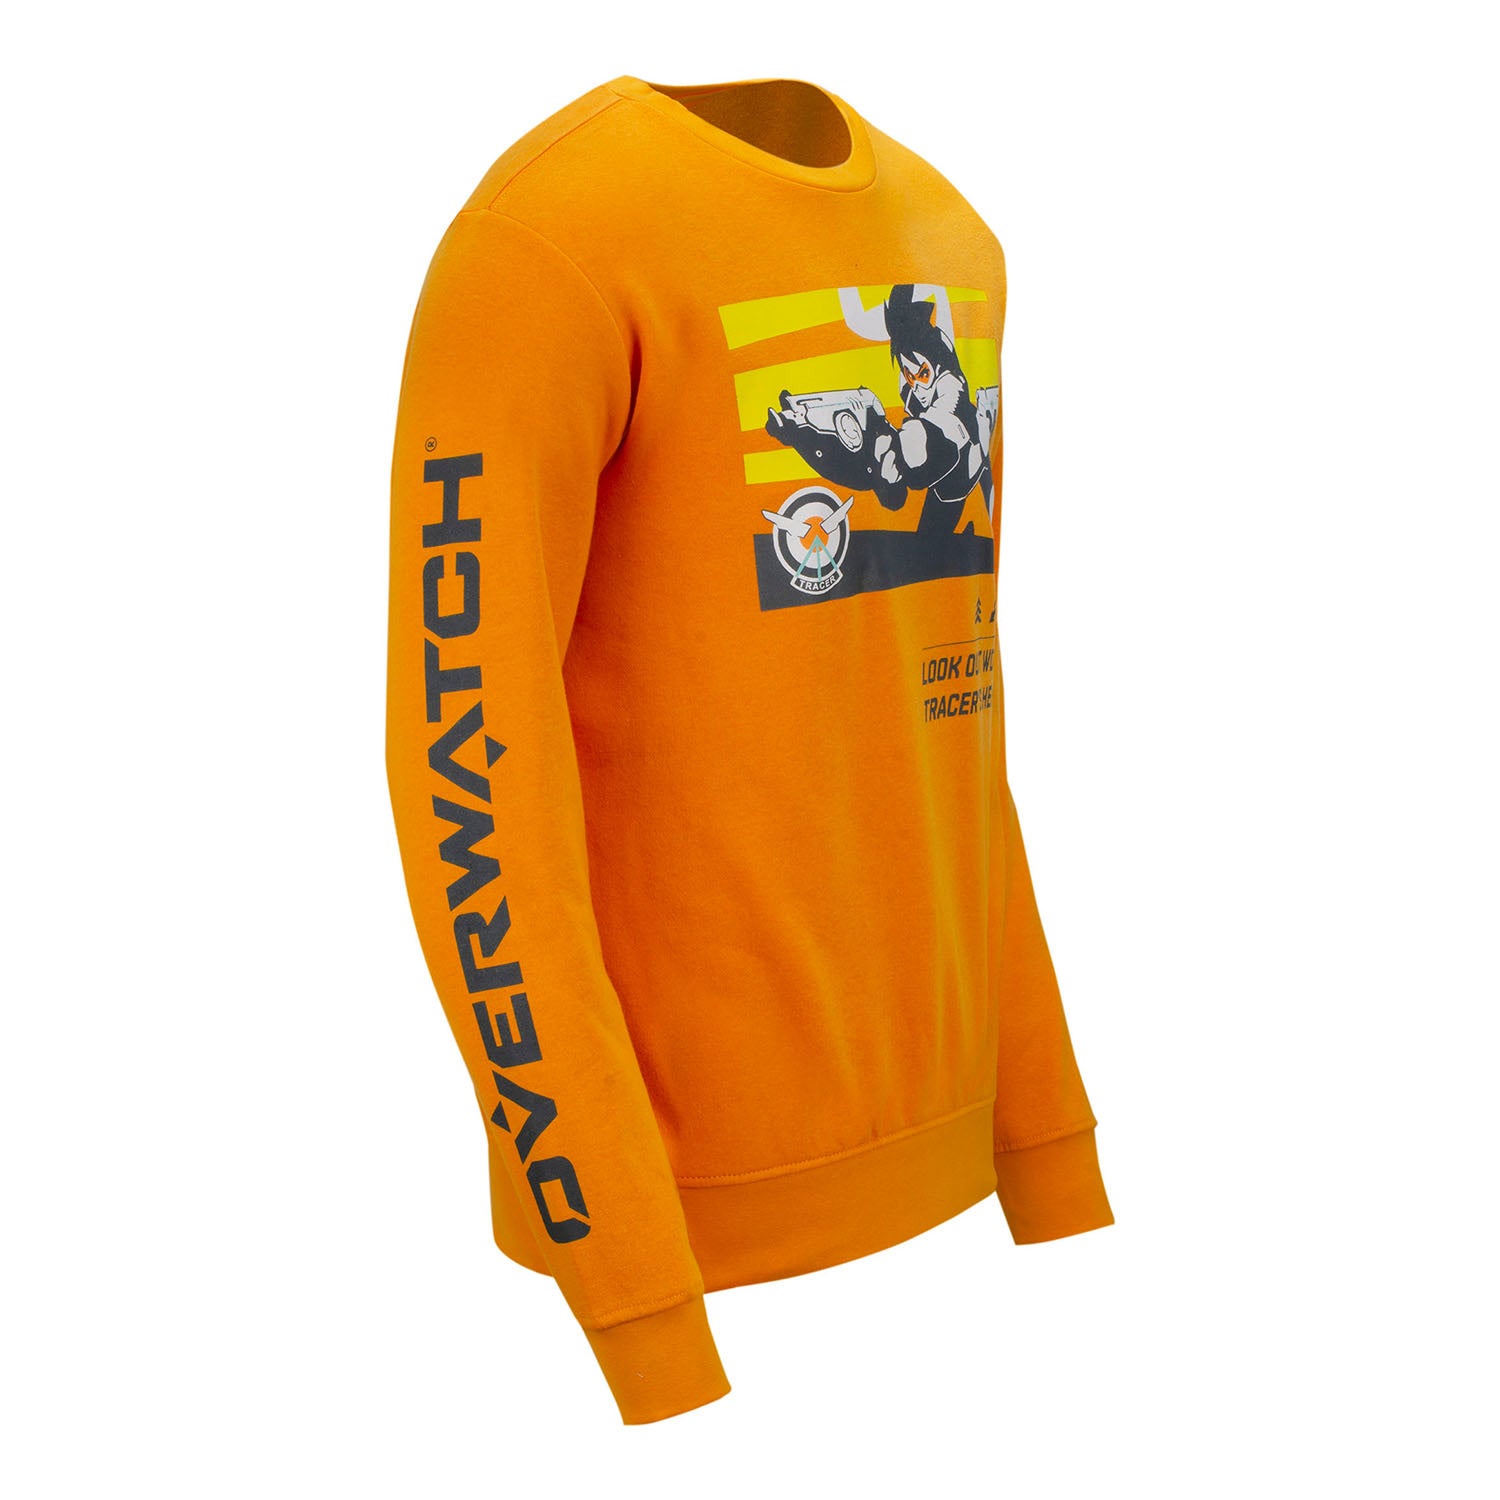 Overwatch Tracer Orange Crewneck Sweatshirt - Right View